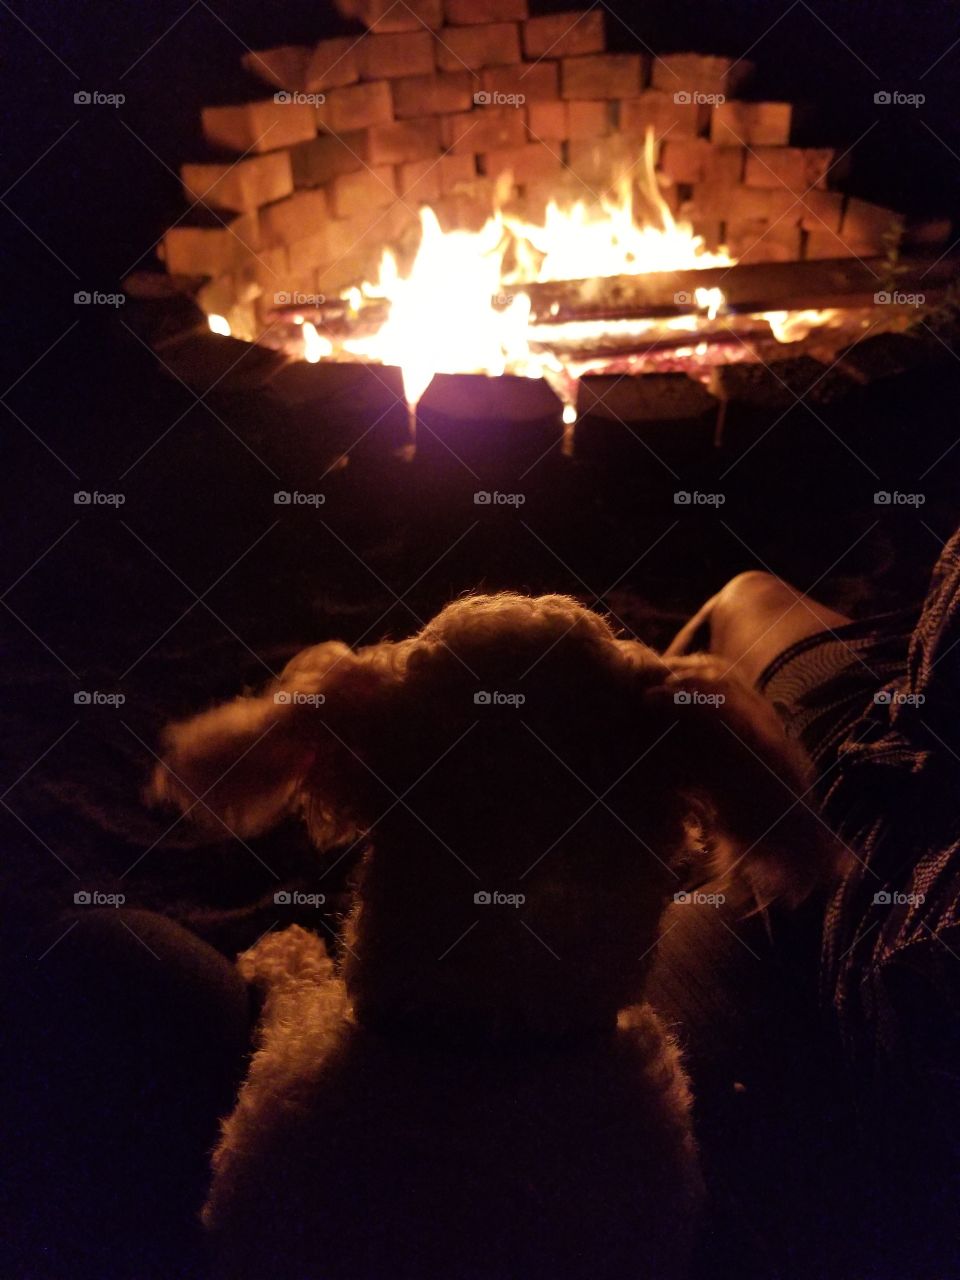 Puppy Dog Enjoying a warm burning fire at a lake house